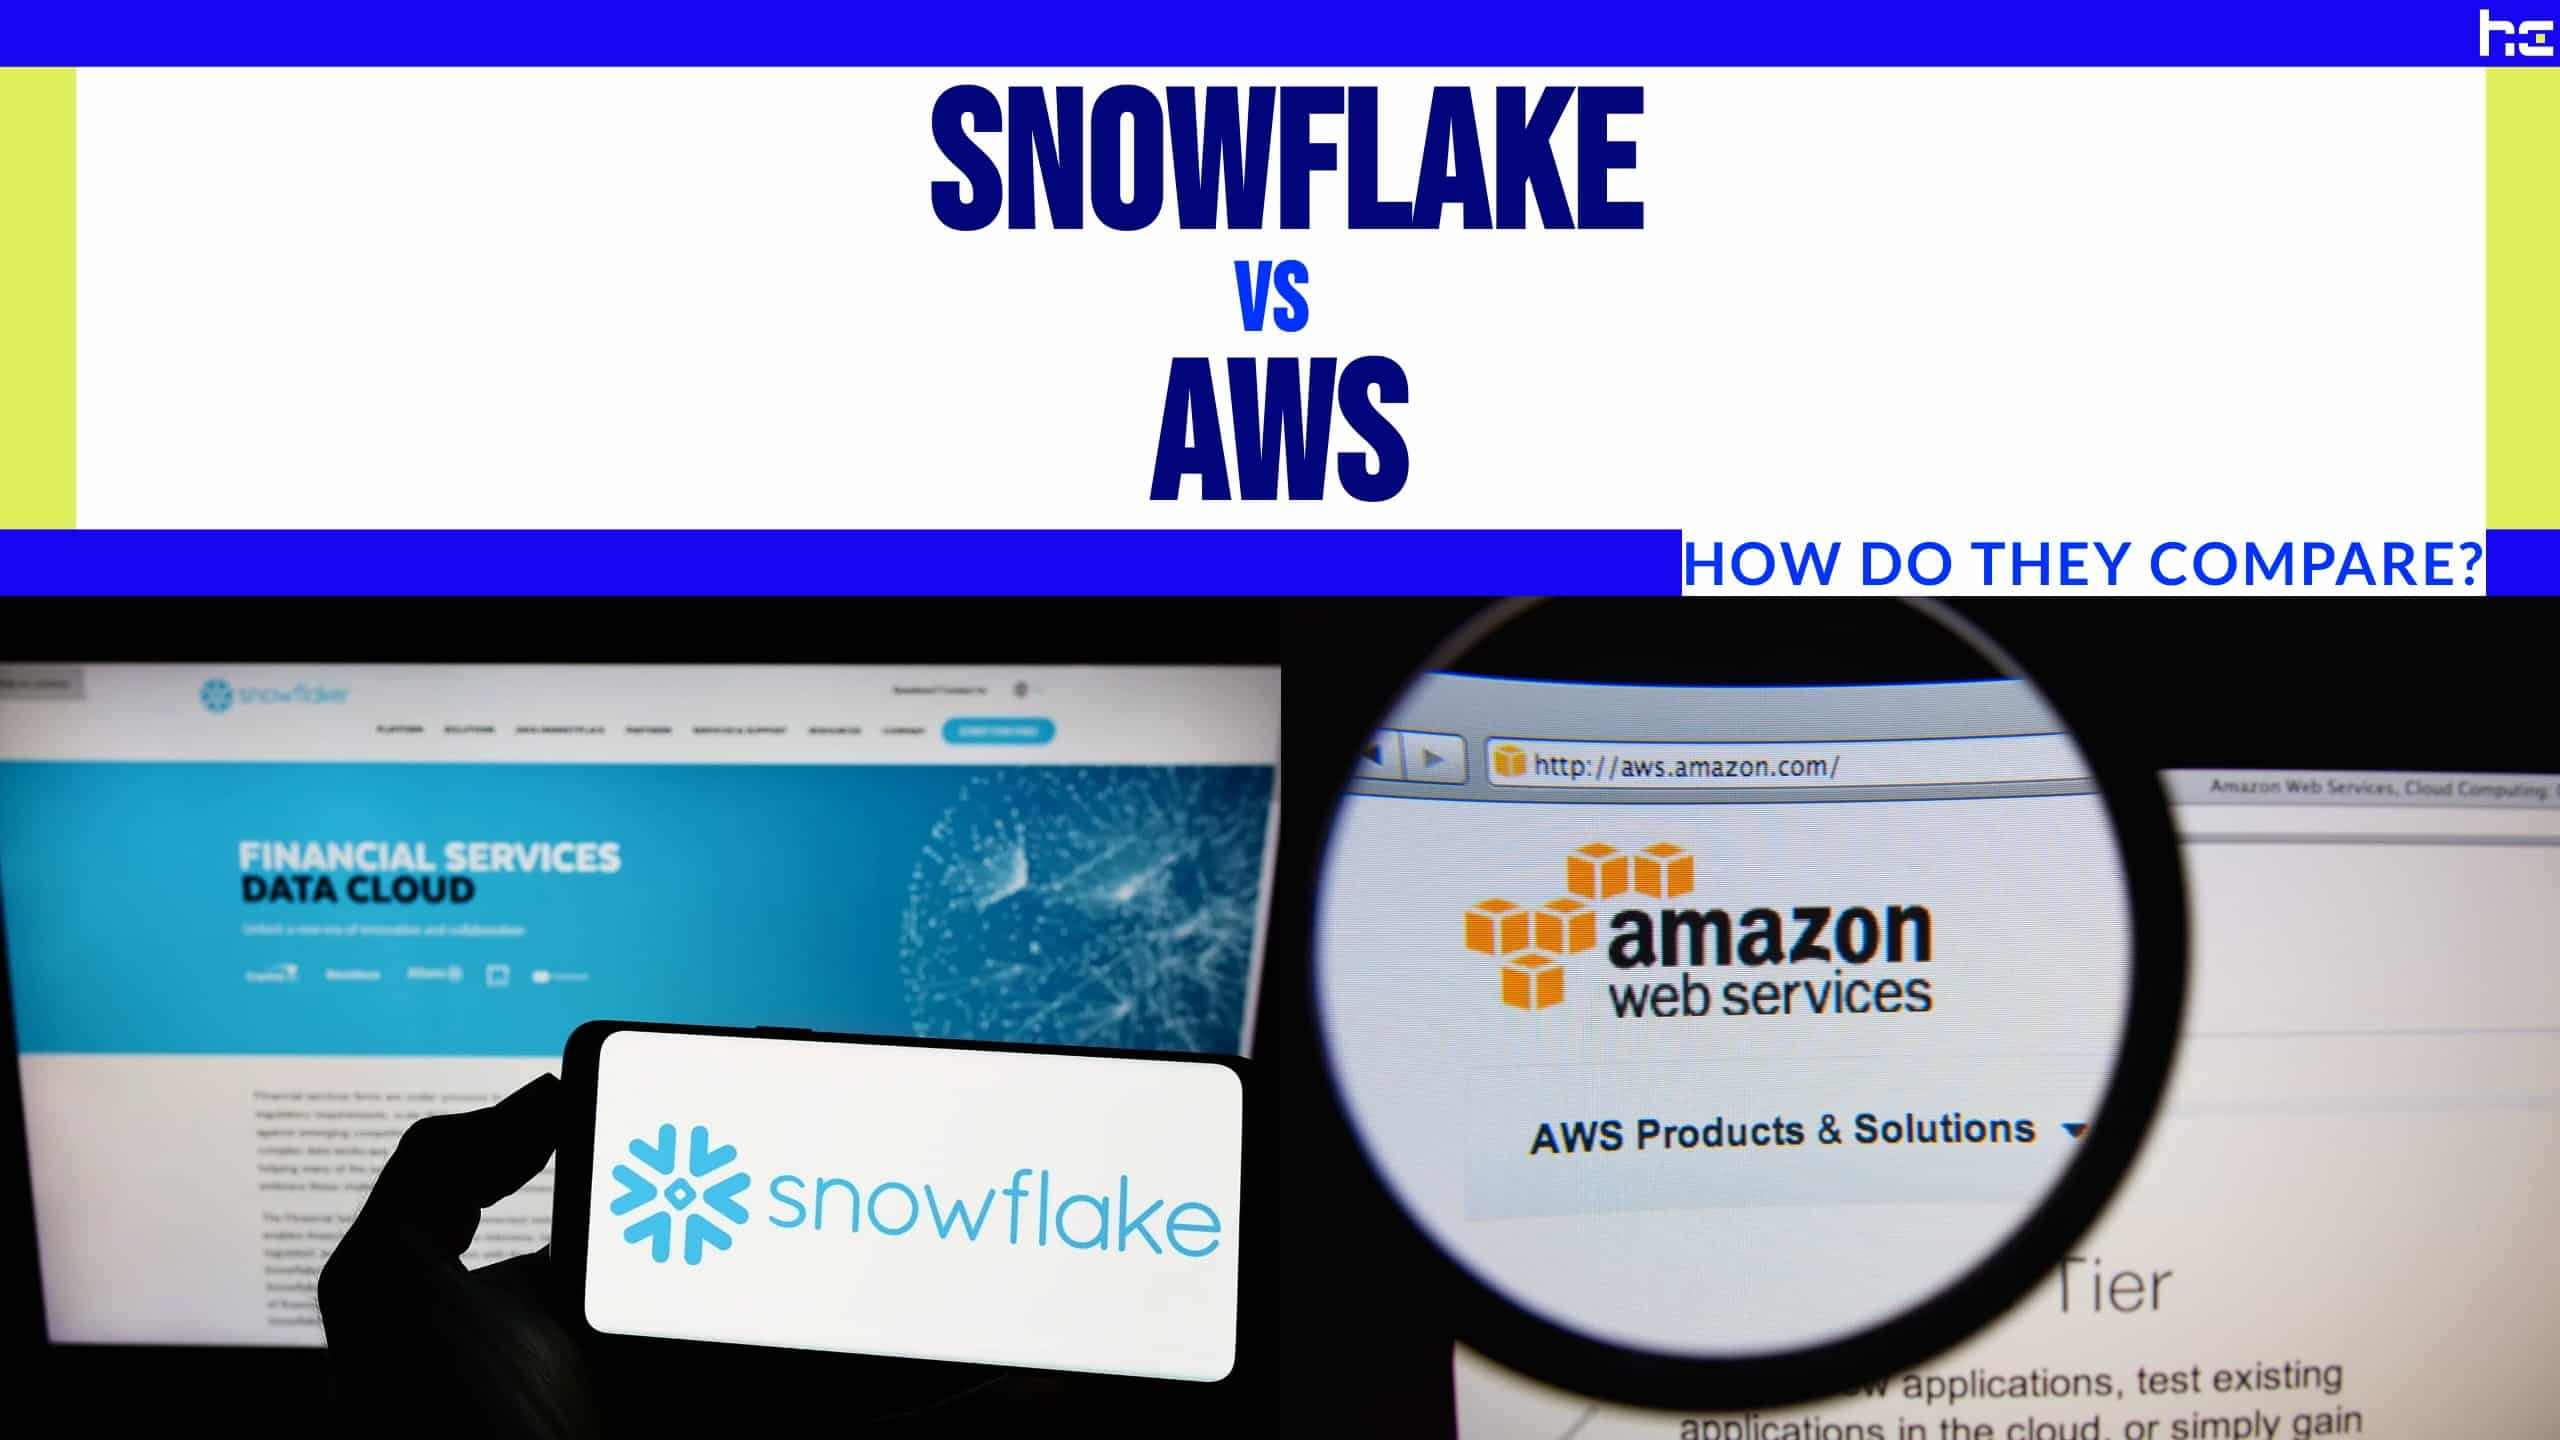 Snowflake vs AWS featured image